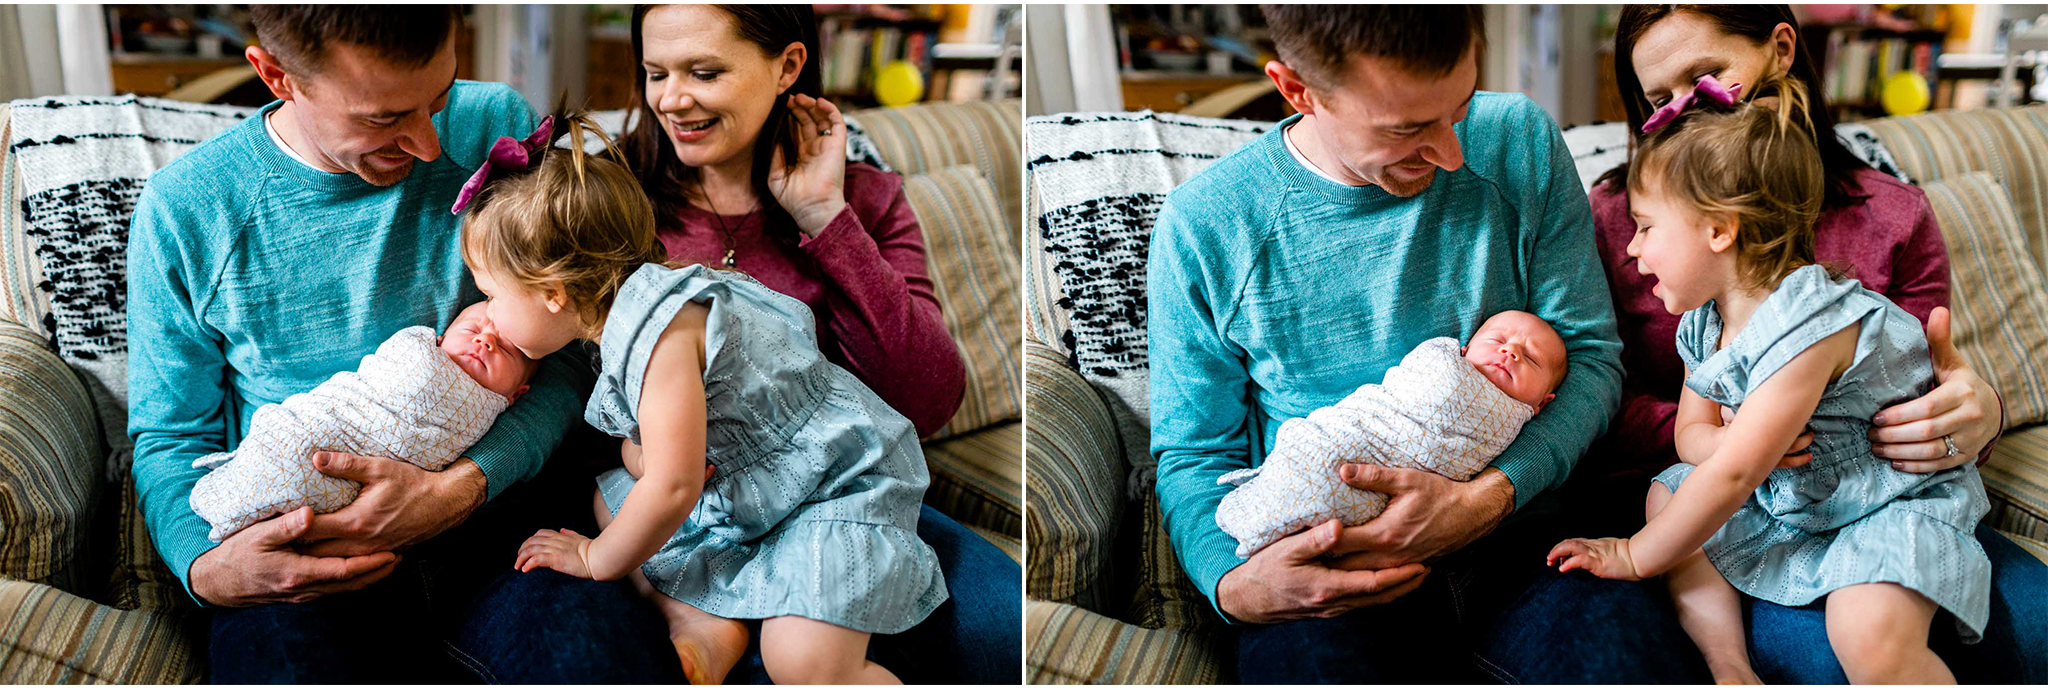 Hillsborough Newborn Photographer | By G. Lin Photography | Candid lifestyle family photos indoors